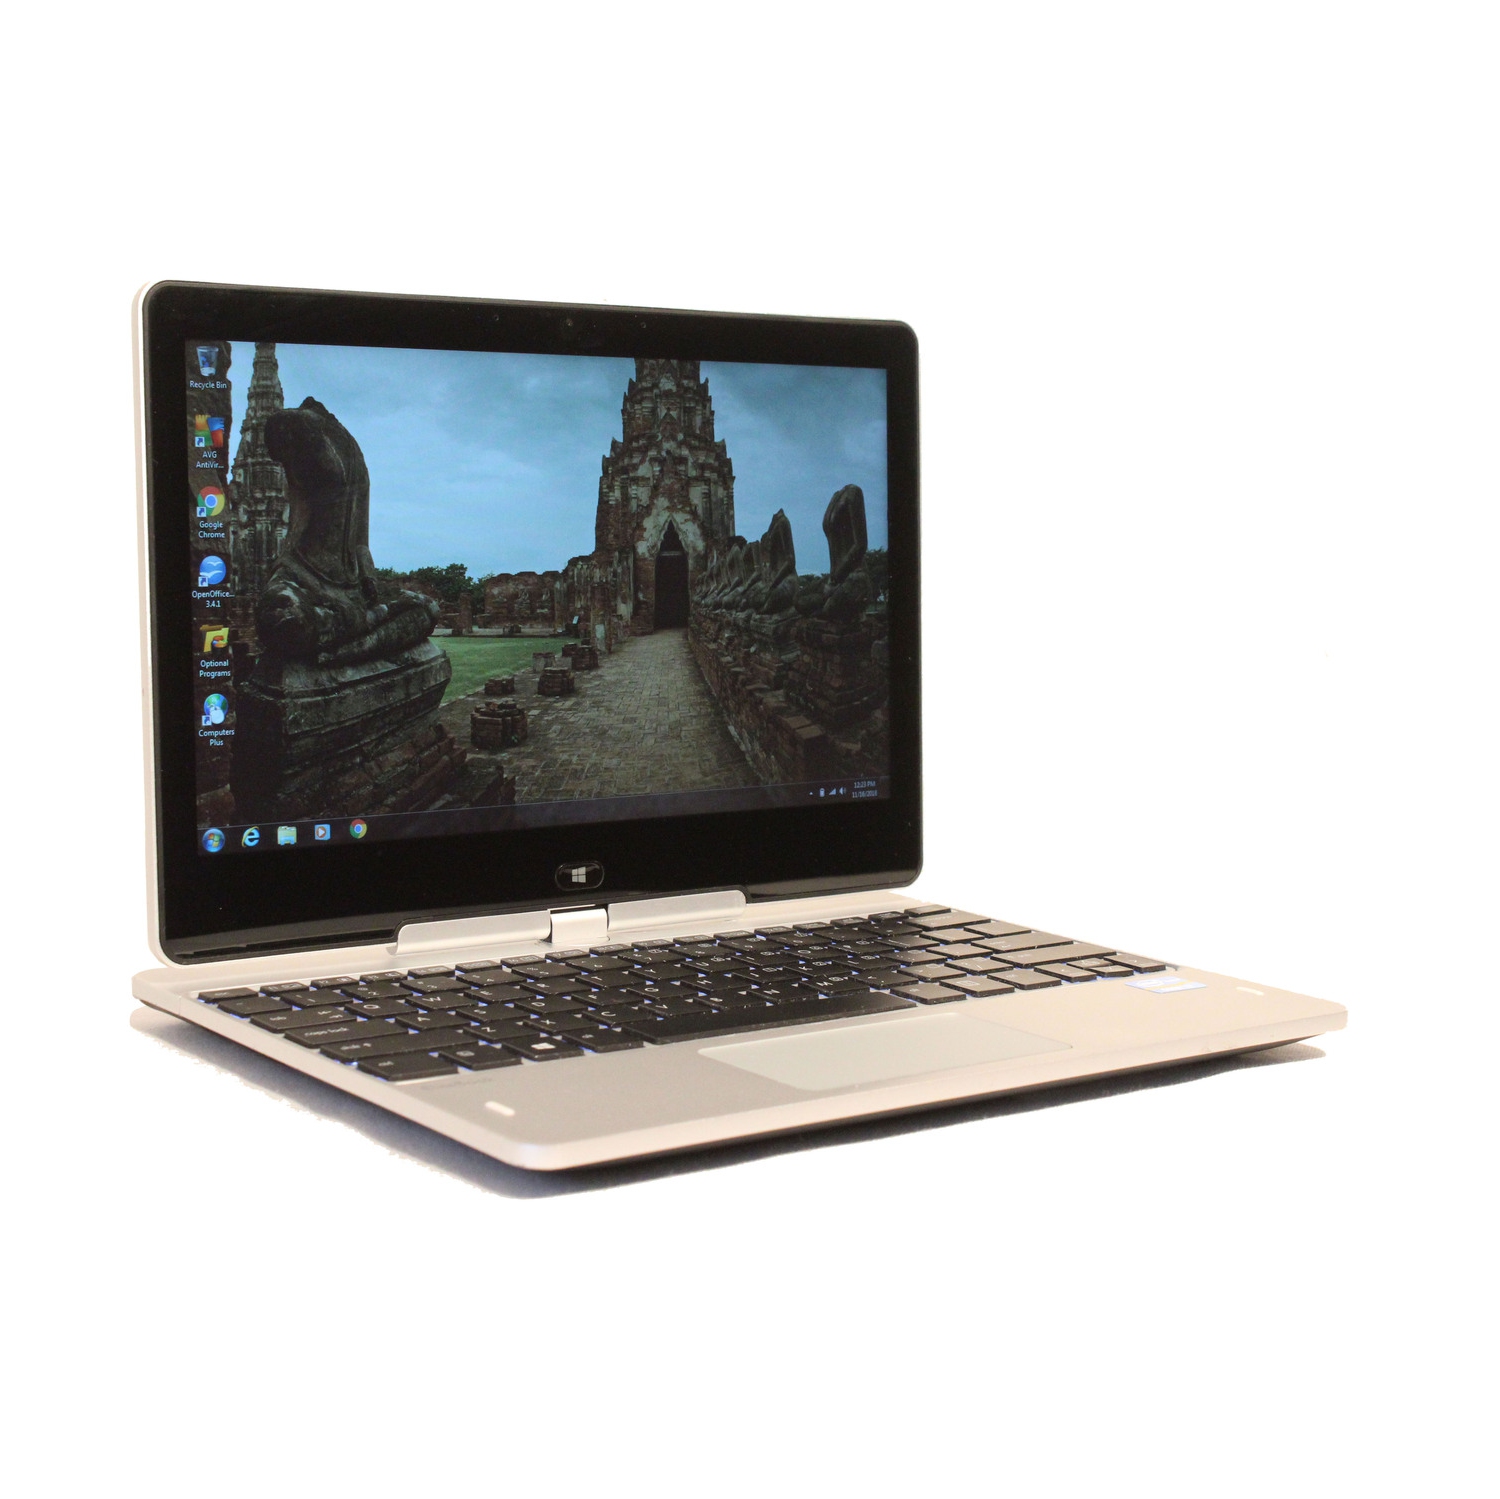 Refurbished (Good) - HP EliteBook Revolve 810 G1 11.6" 2-in-1 Tablet Laptop, Core i5 3rd Gen, 8GB, 128GB SSD, Windows 10